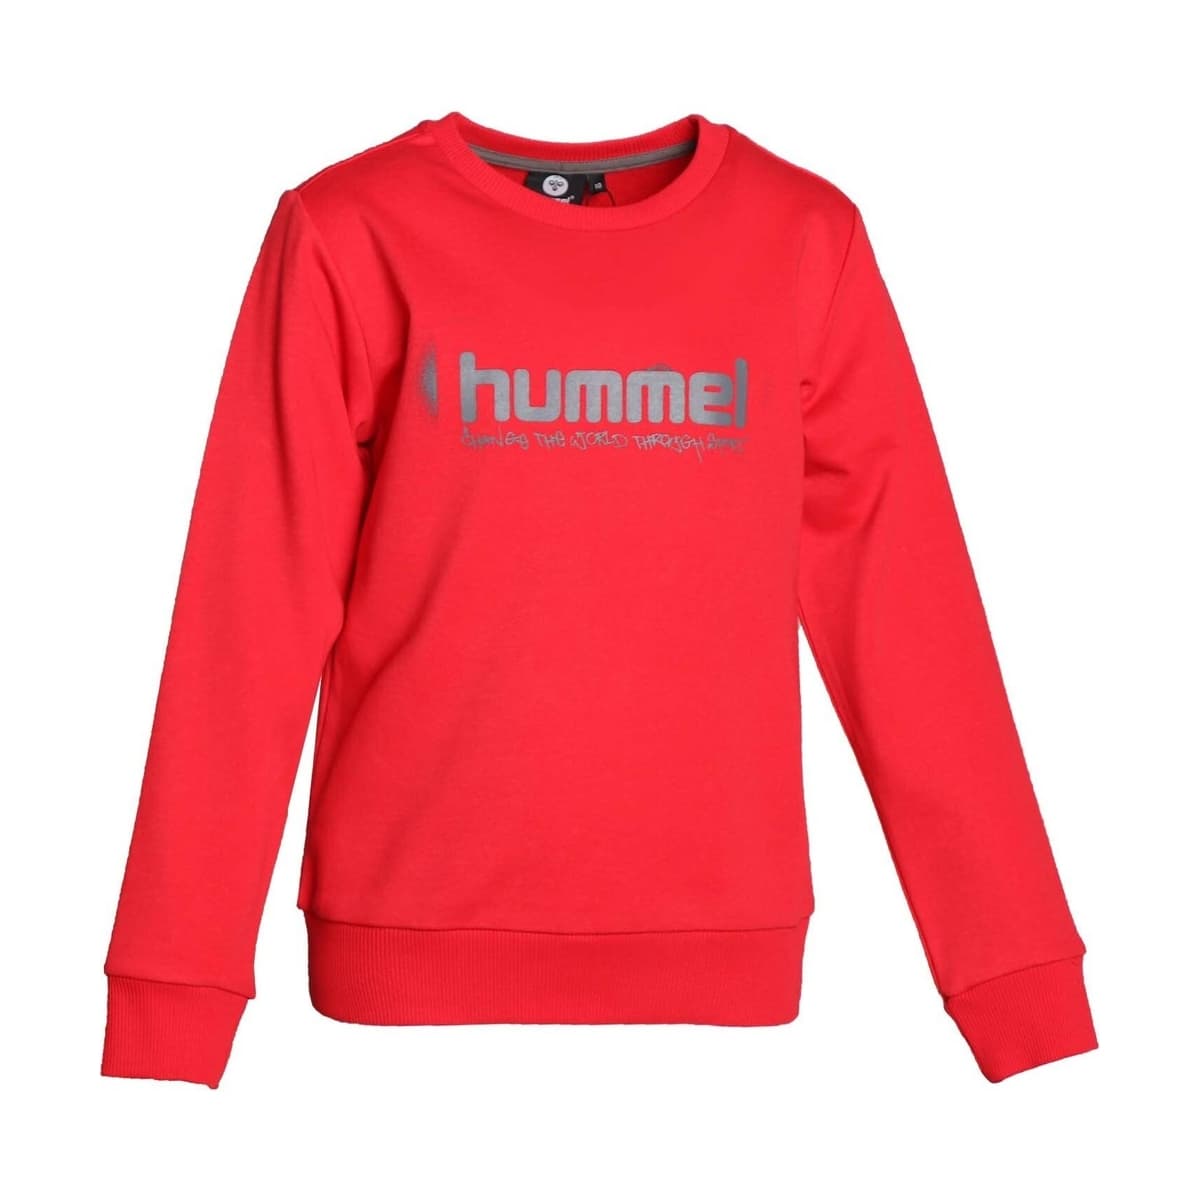 Hummel Neo Çocuk Kırmızı Sweatshirt (921302-1301)